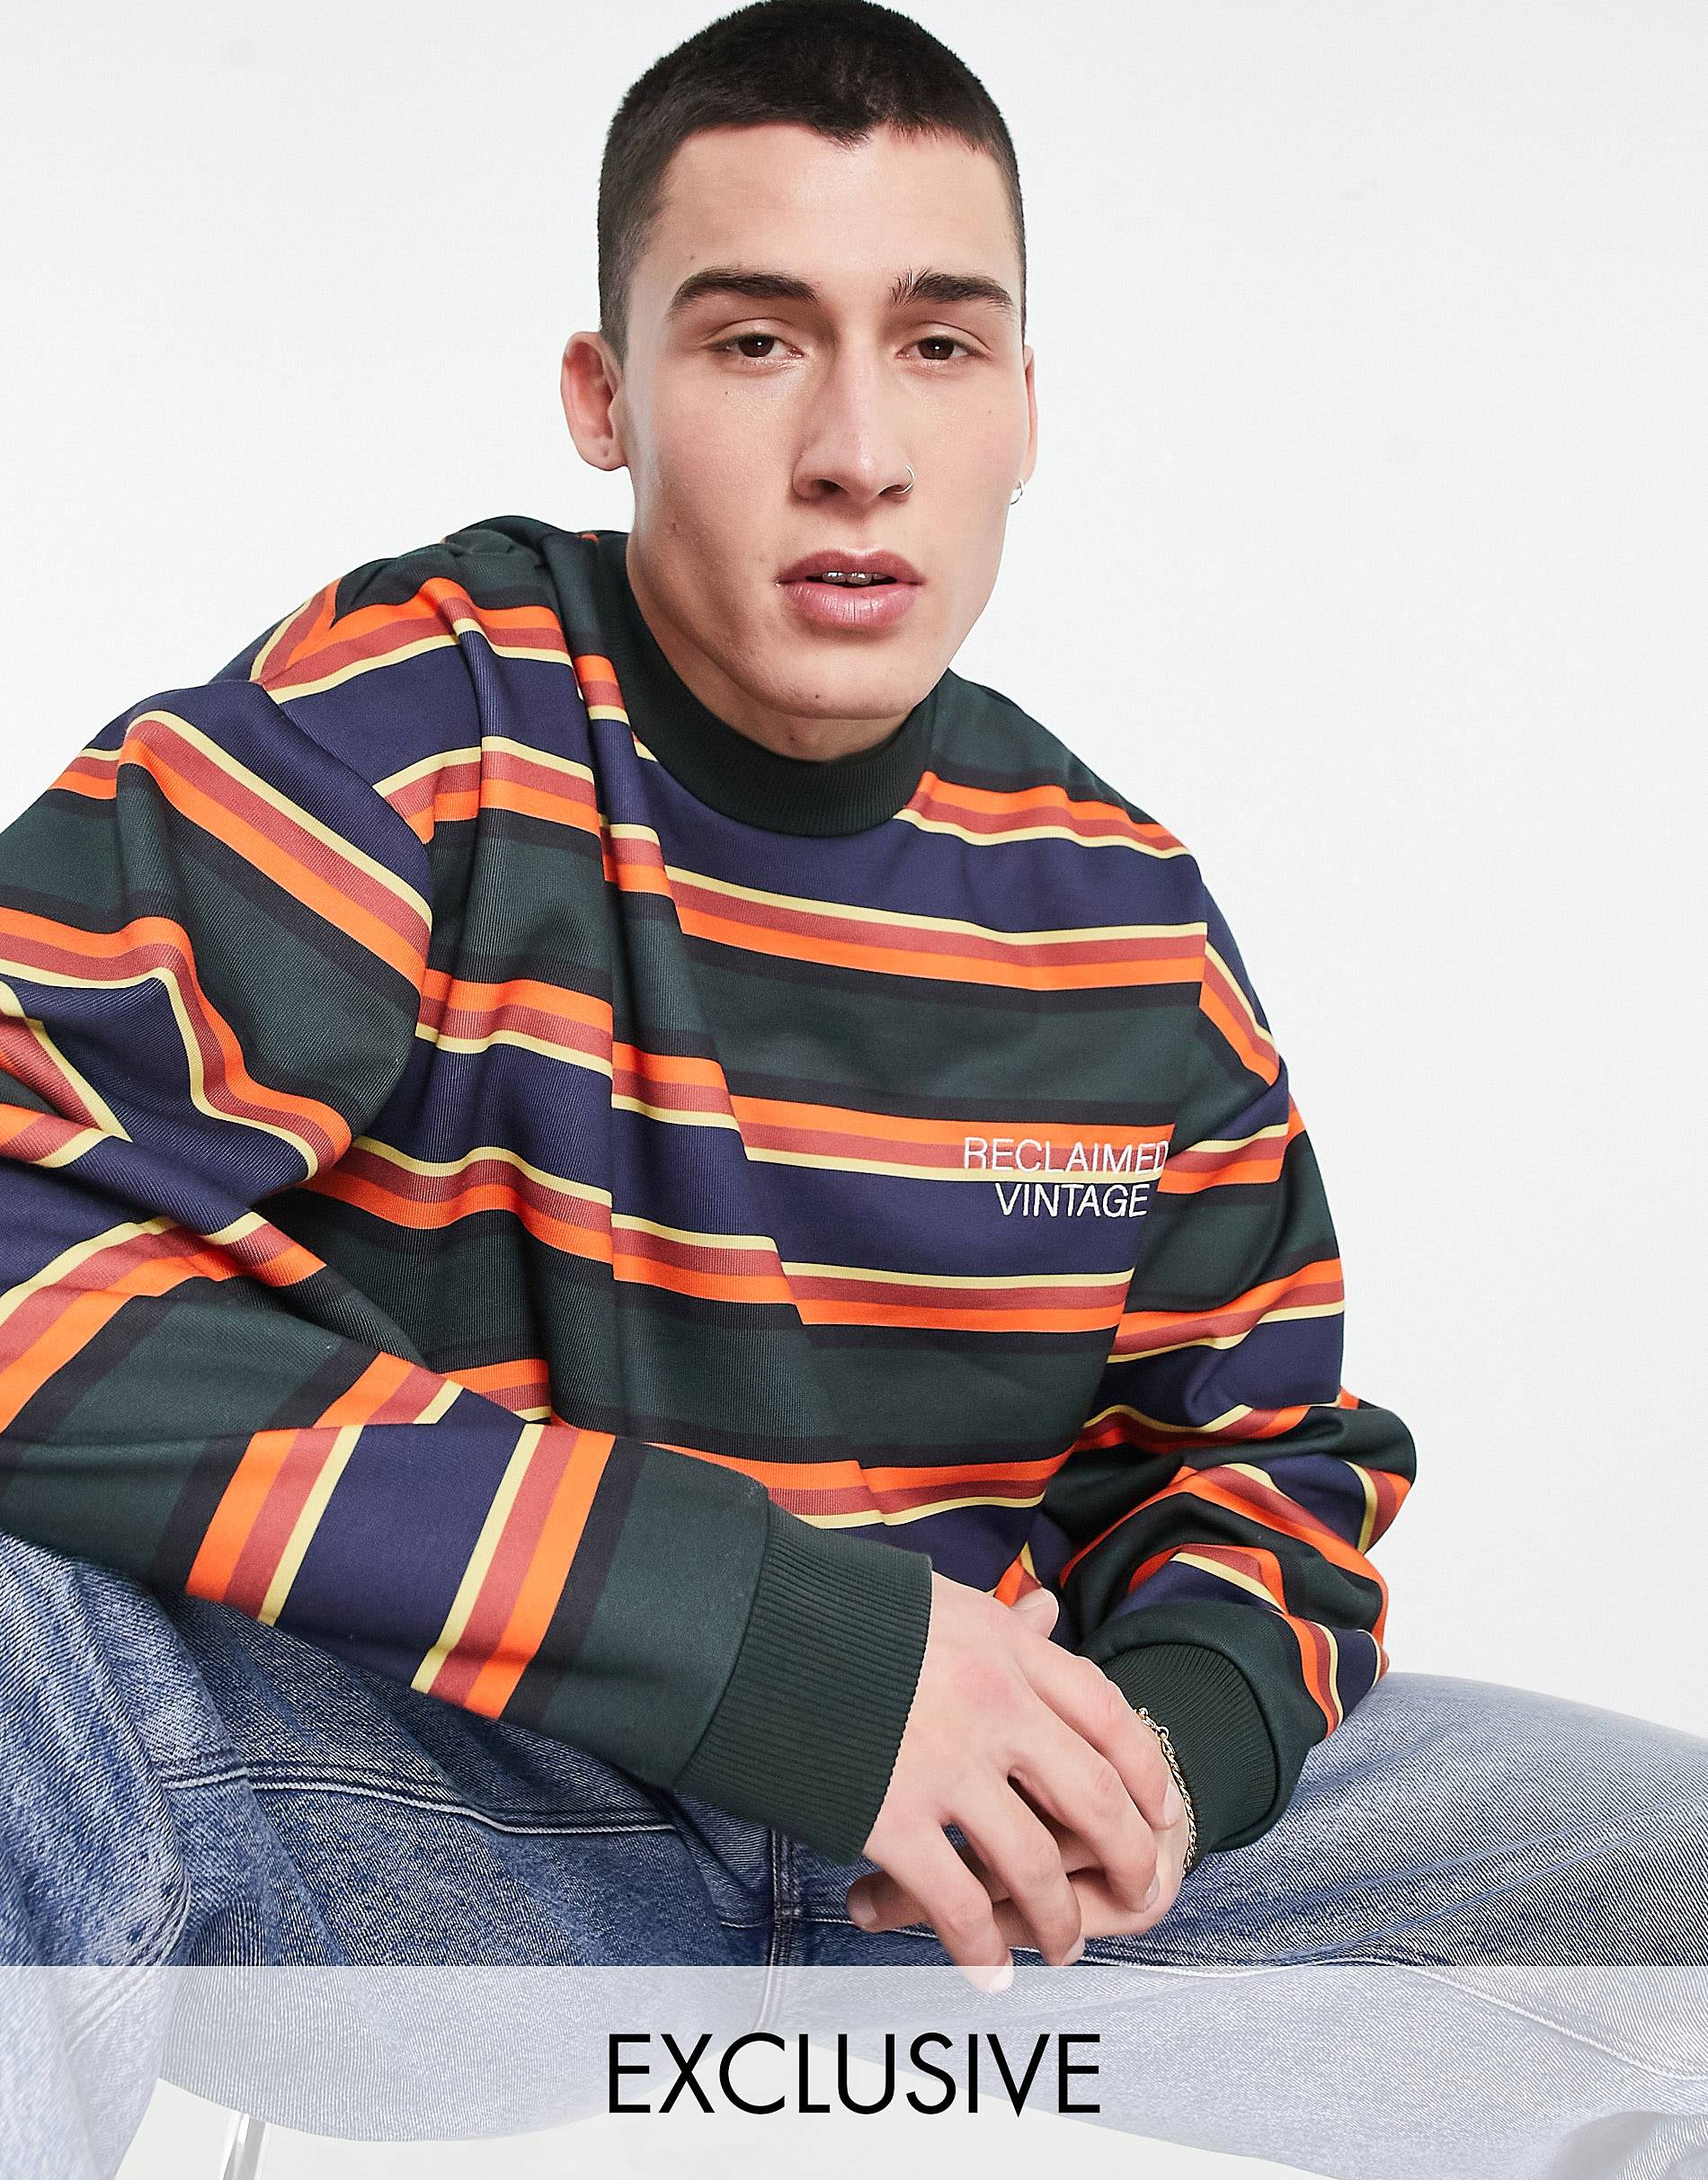 asos.com | Reclaimed Vintage Inspired unisex striped sweatshirt